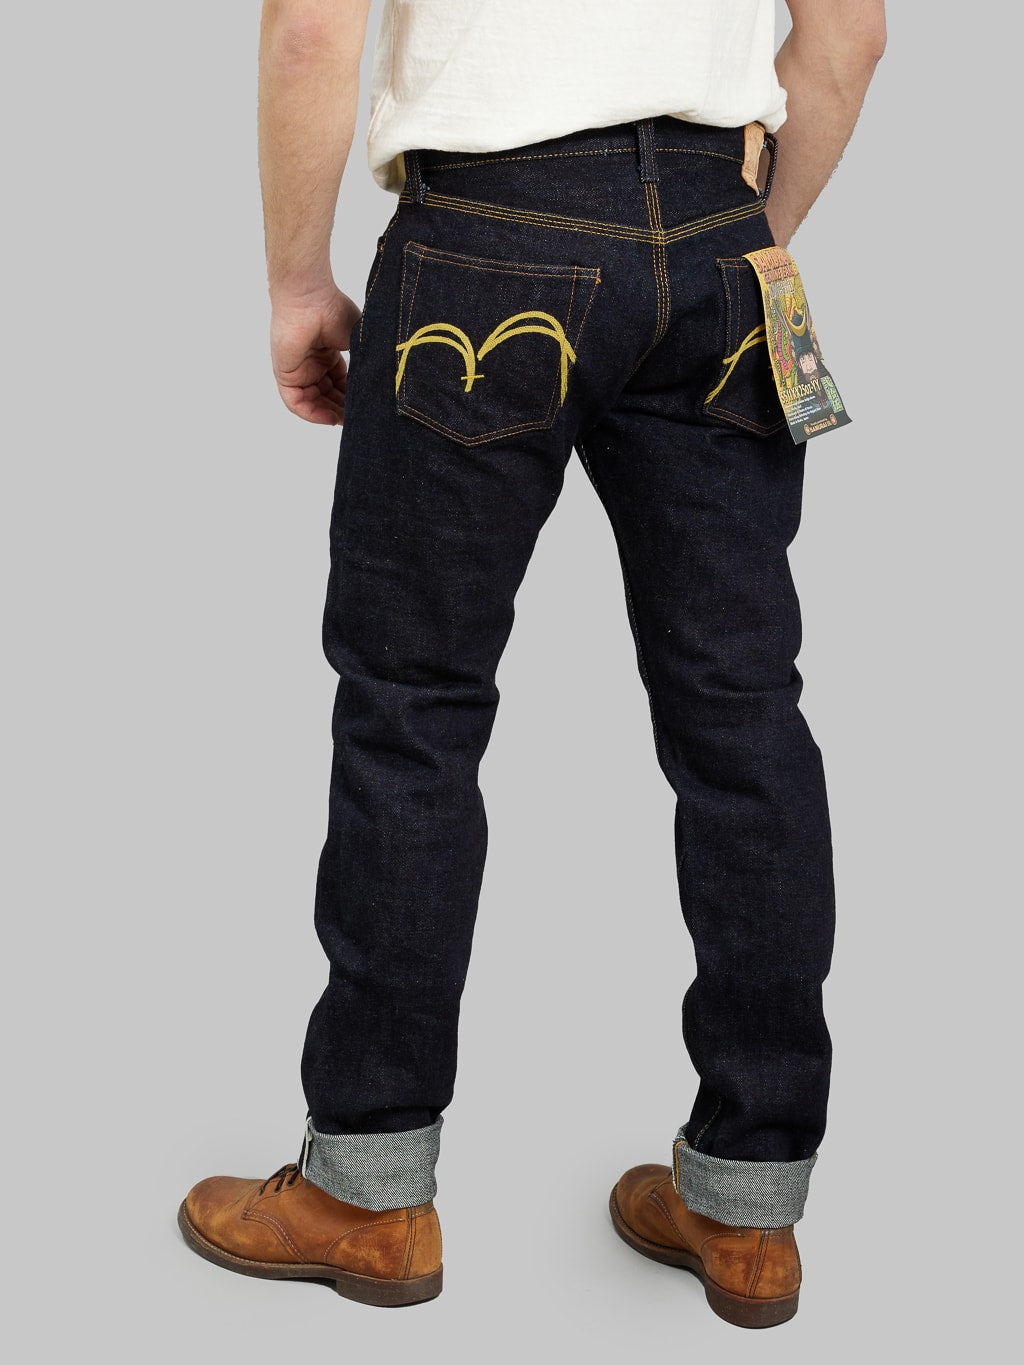 Samurai Jeans S511XX 25oz Kirinji Slim Tapered selvedge Jeans mid rise